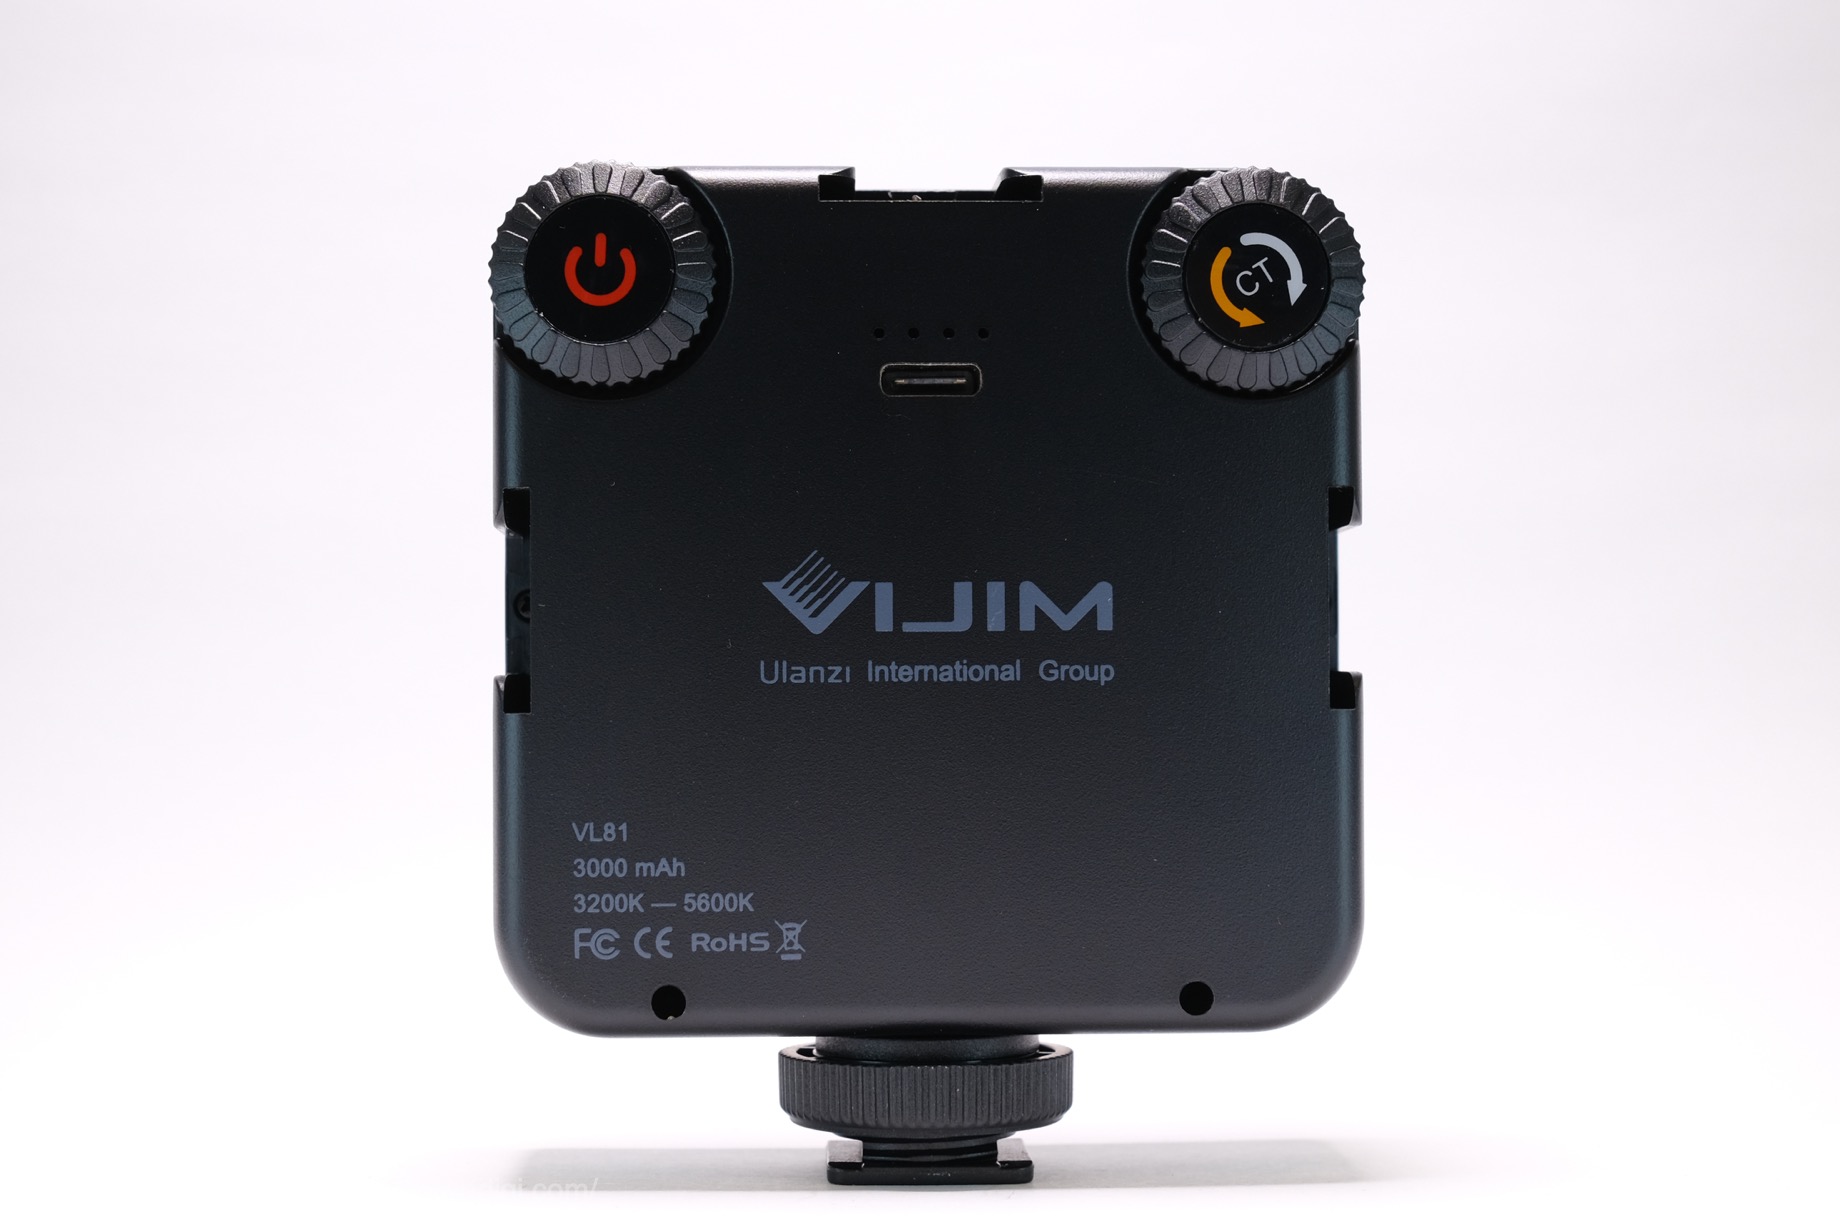 VIJIM VL81 LEDビデオライト